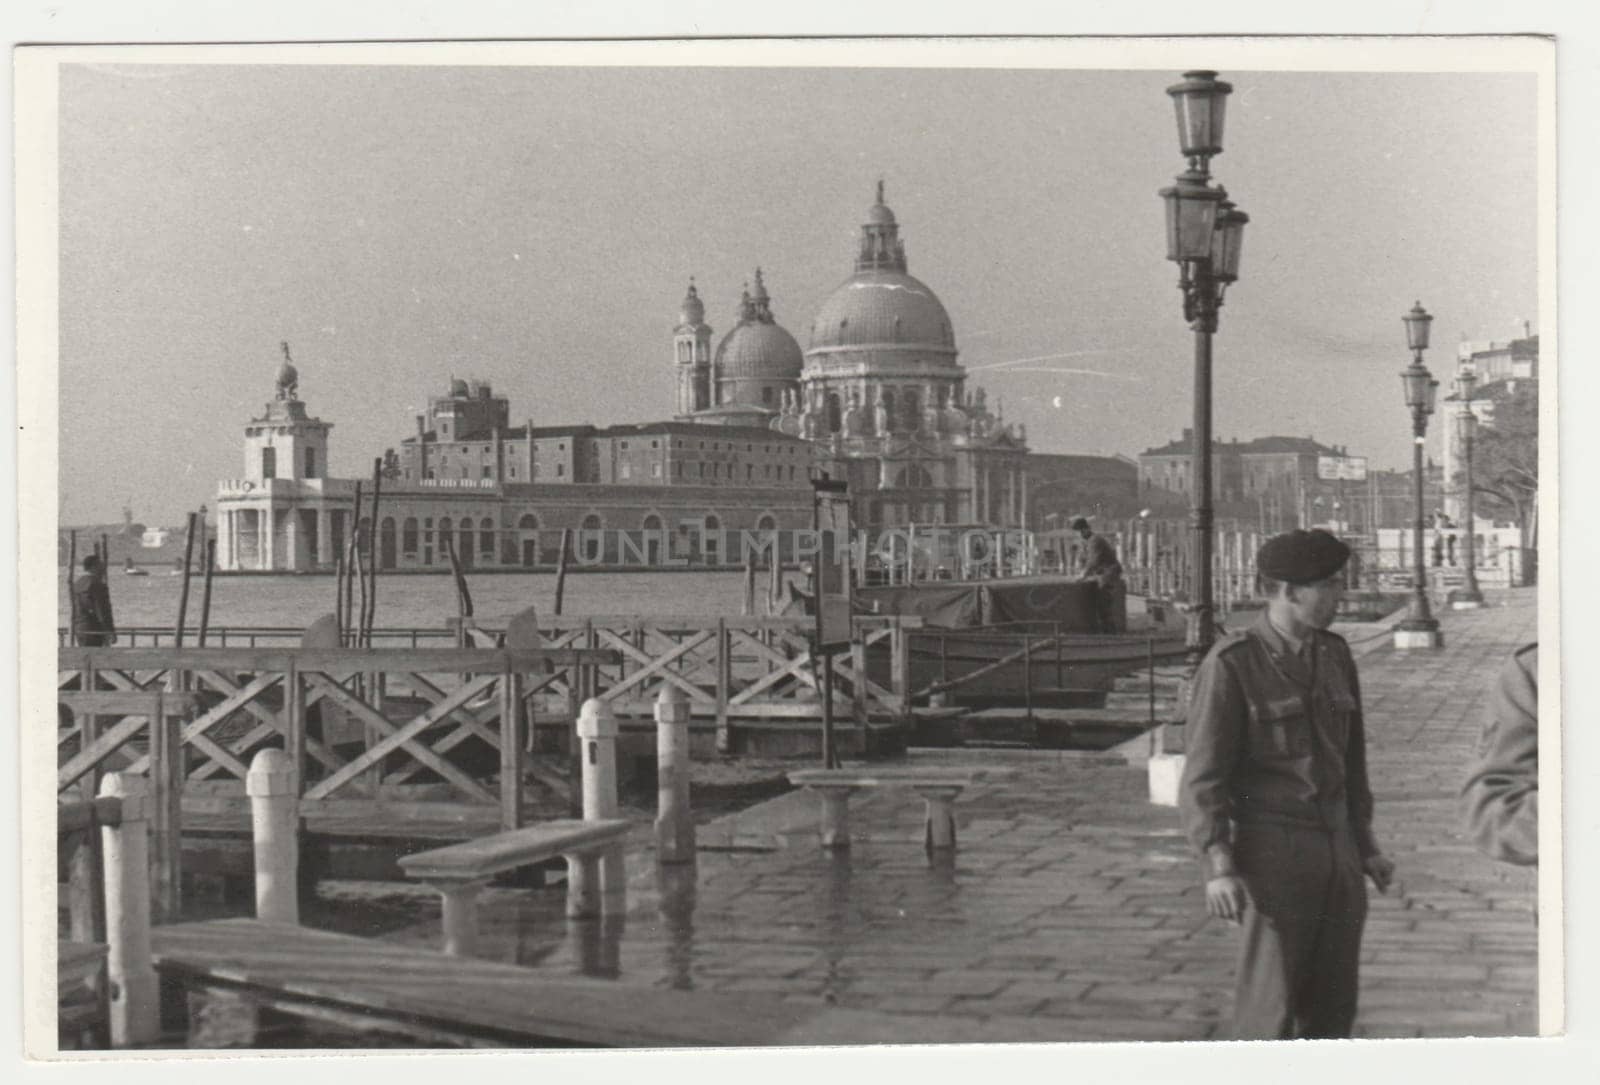 VENEZIA - VENICE, ITALY - CIRCA 1970s: Vintage photo shows the Italian town - Venice. Retro black and white photography. Circa 1970s.